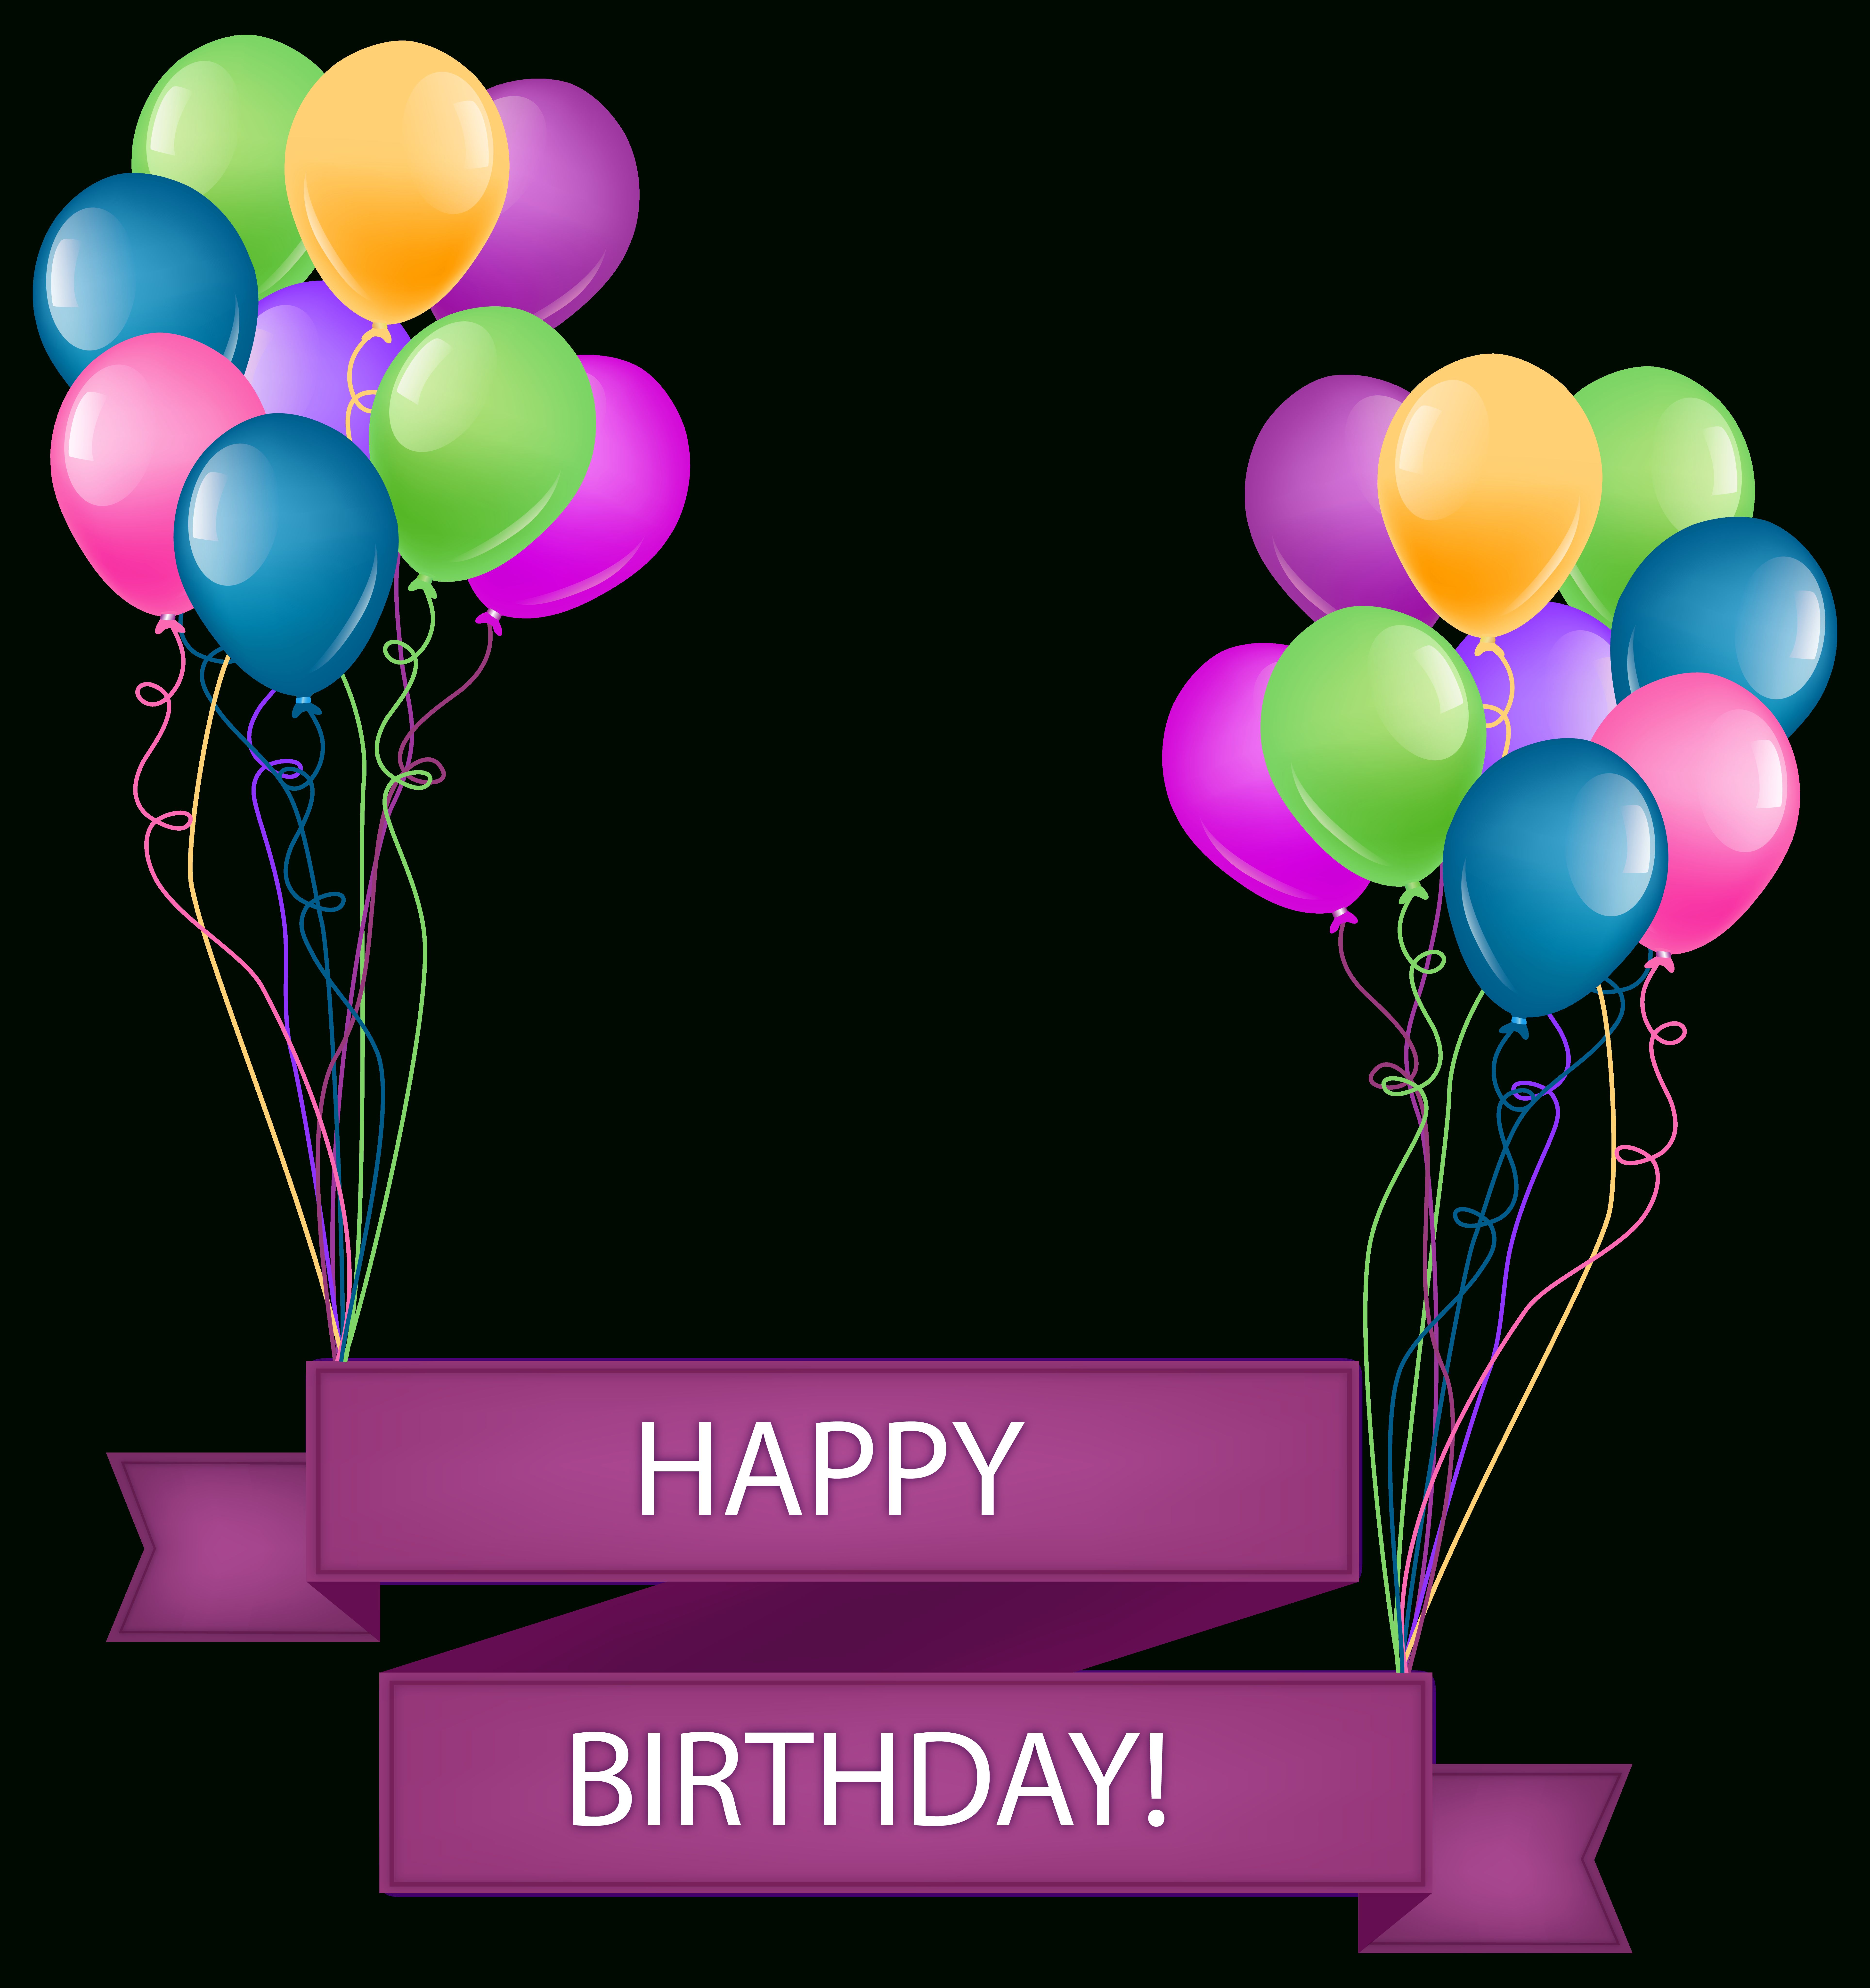 Happy Birthday Banner Designs Free Download – Yeppe Pertaining To Free Happy Birthday Banner Templates Download